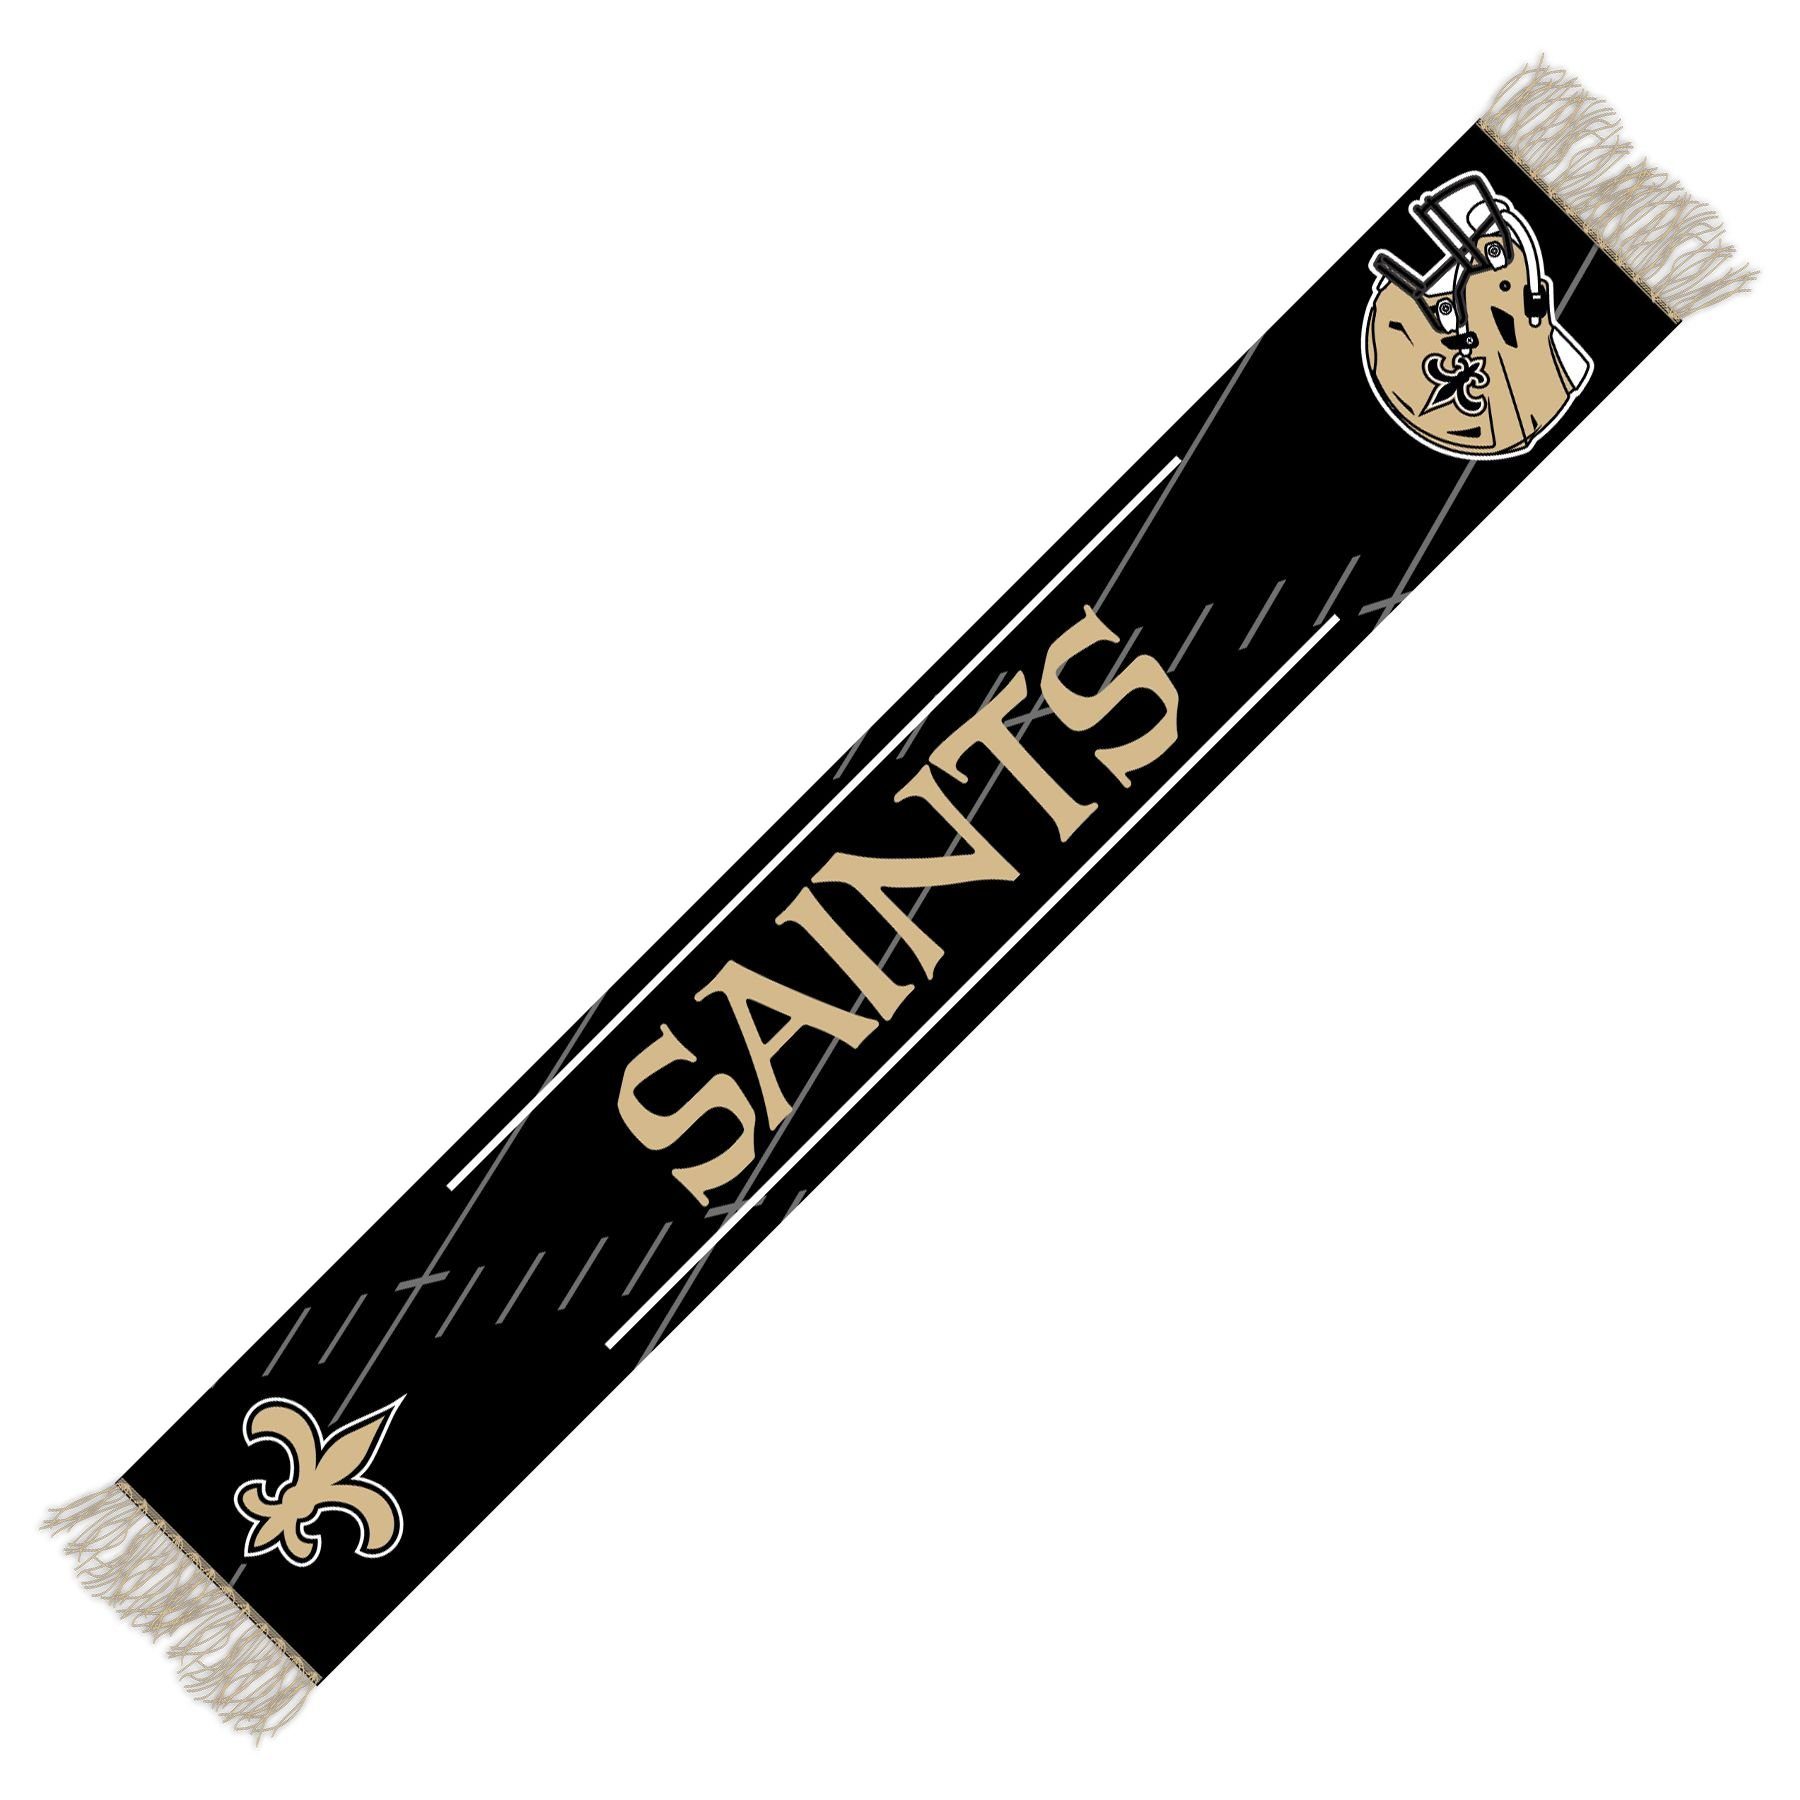 Great Branding New Multifunktionstuch Great Teams NFL Saints Orleans Branding